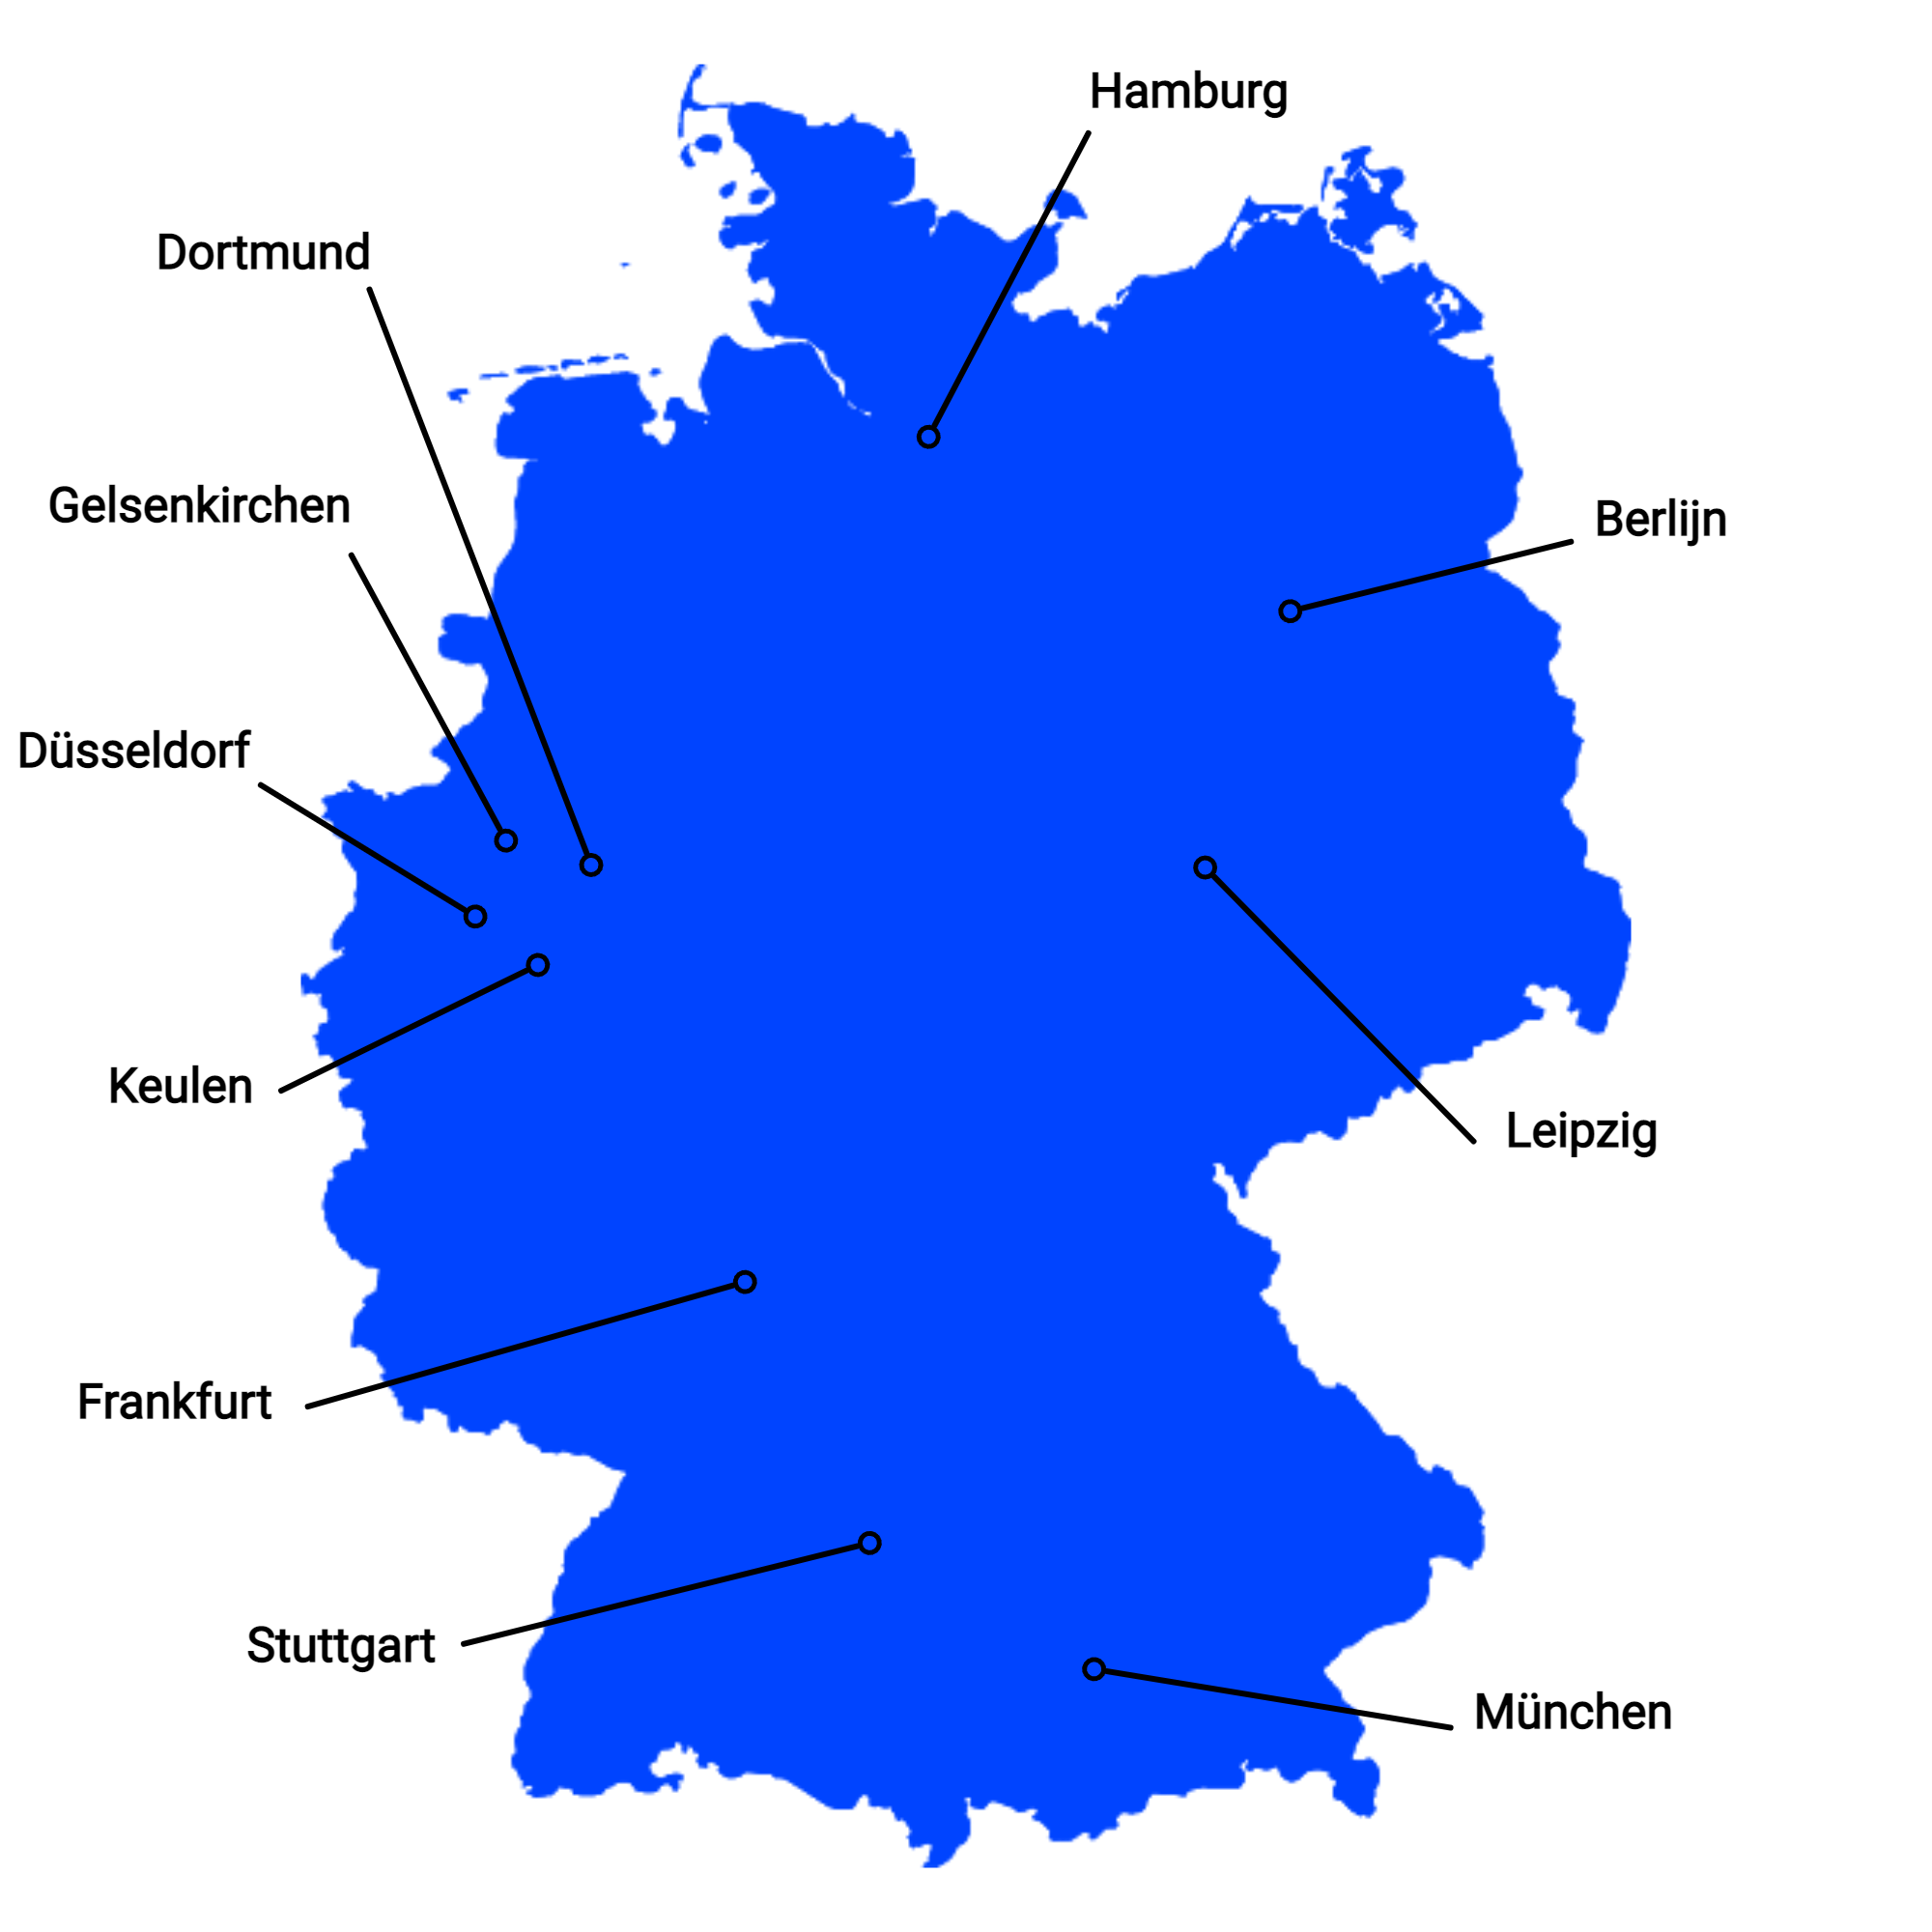 Duitsland kaart speelsteden EK 2024